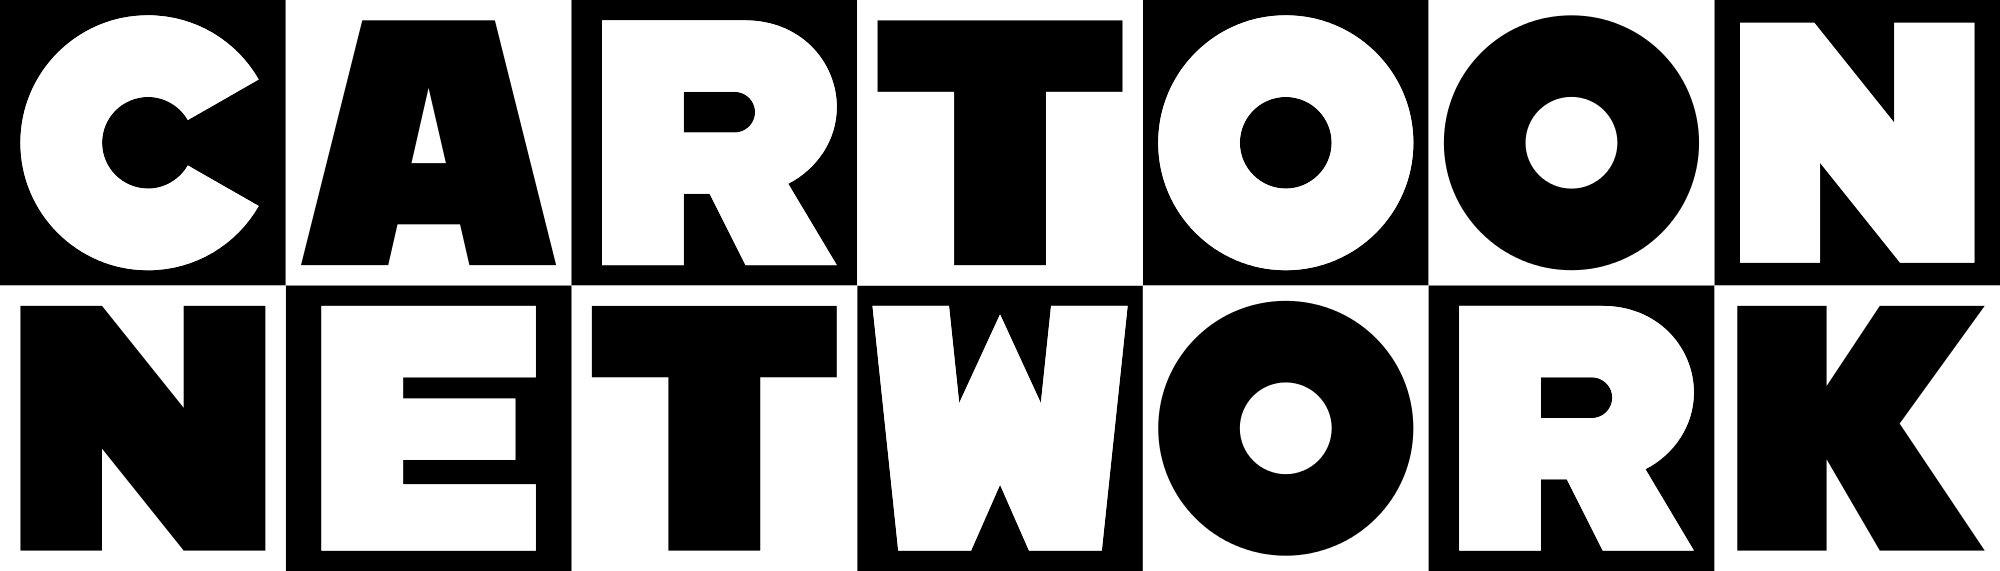 cartoon network 90s logo